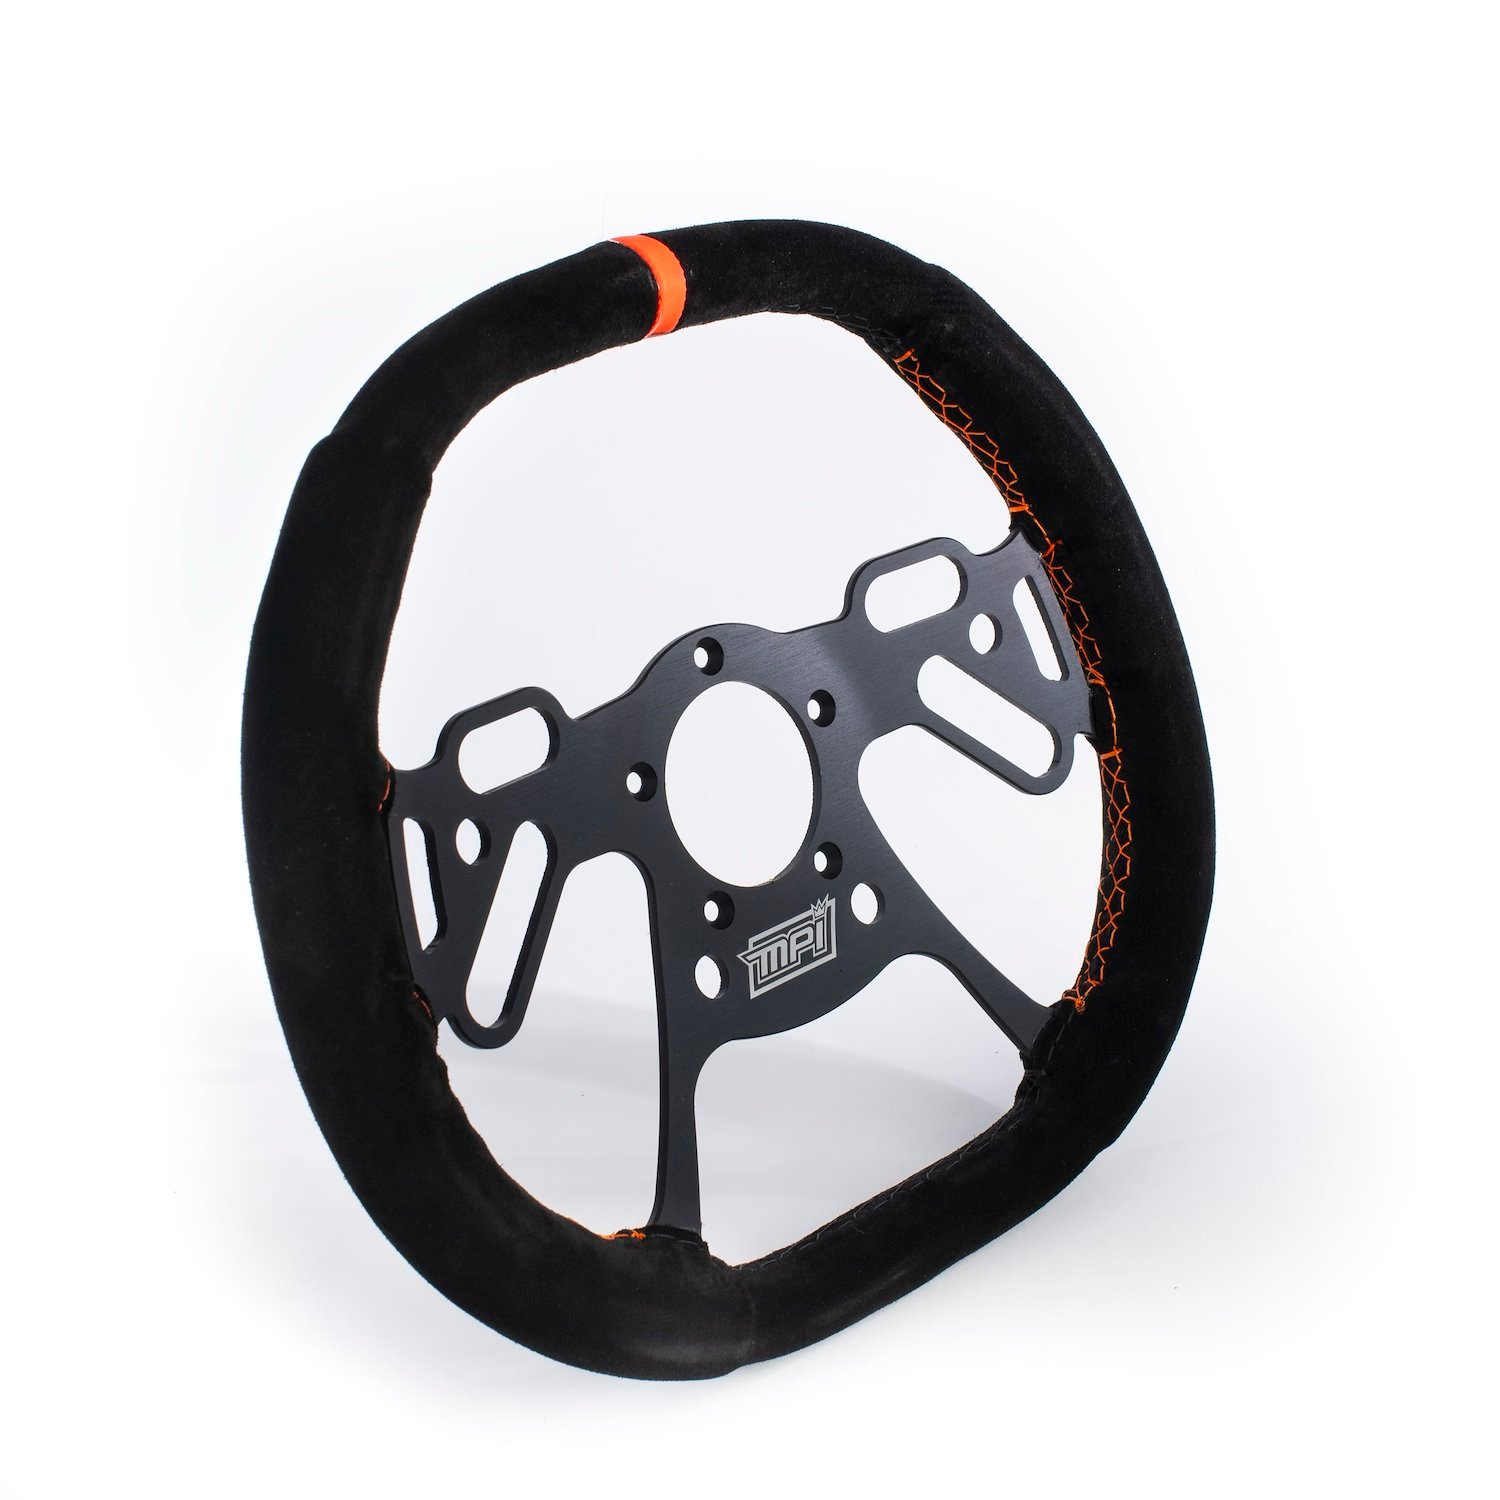 Oval Shaped Grip MPI-DRG2-13-SQD Drag Race Steering Wheel [13 in. Diameter]